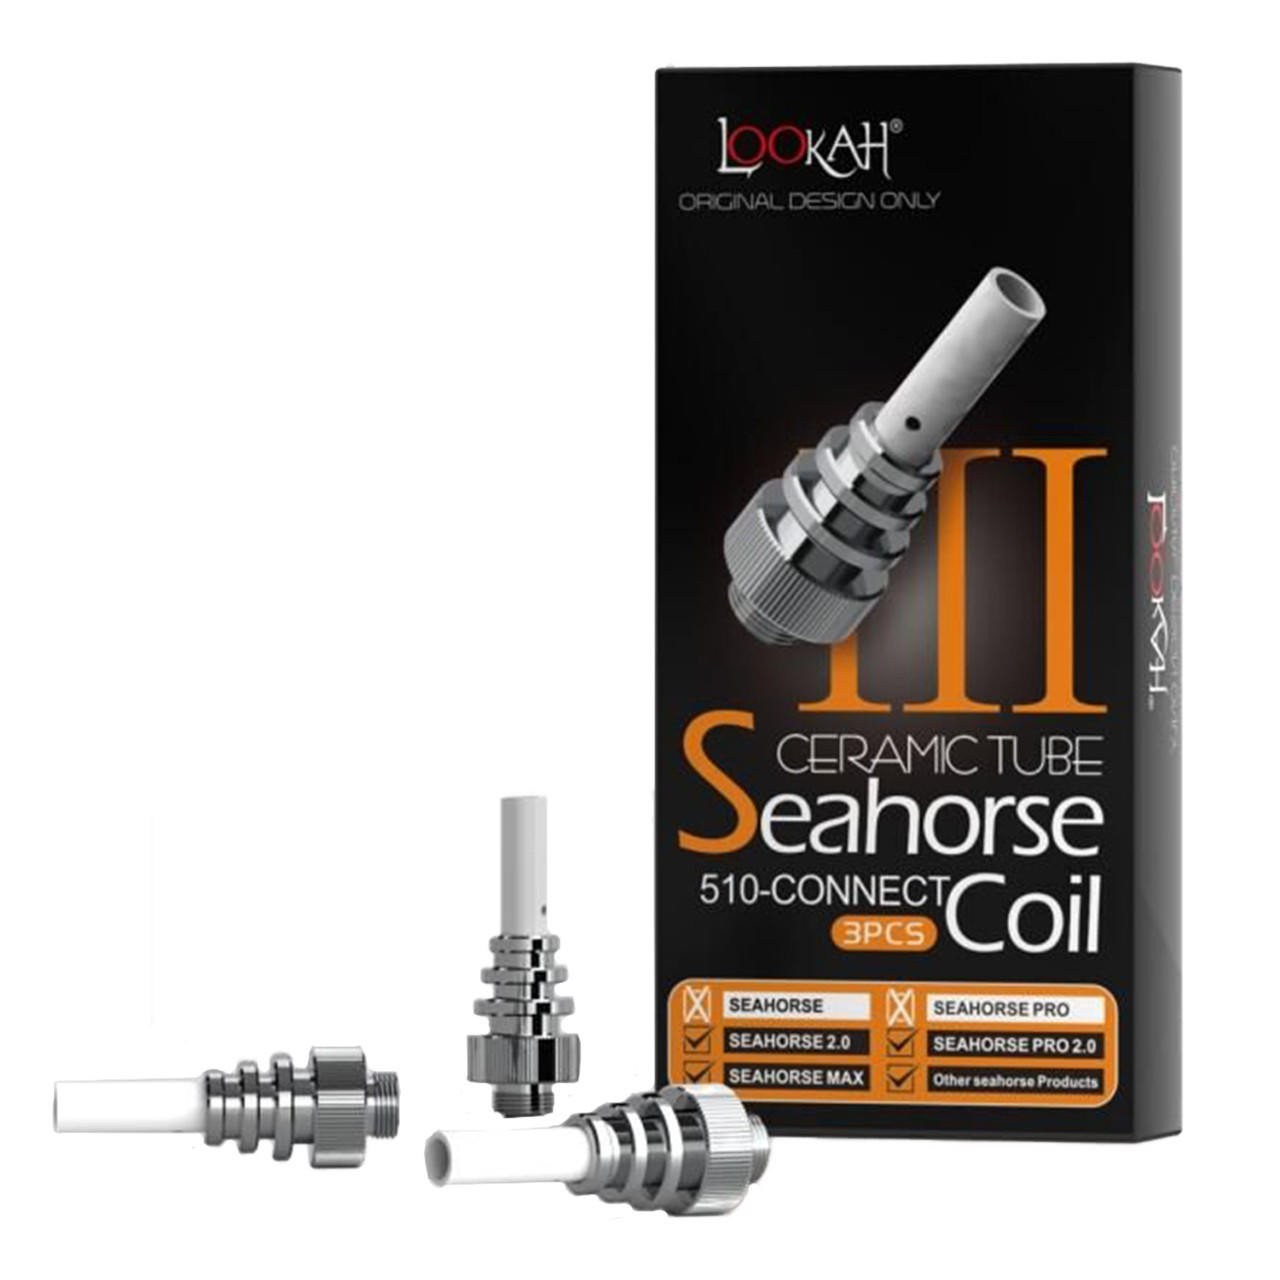 Lookah Seahorse Replacement Tips II Ceramic